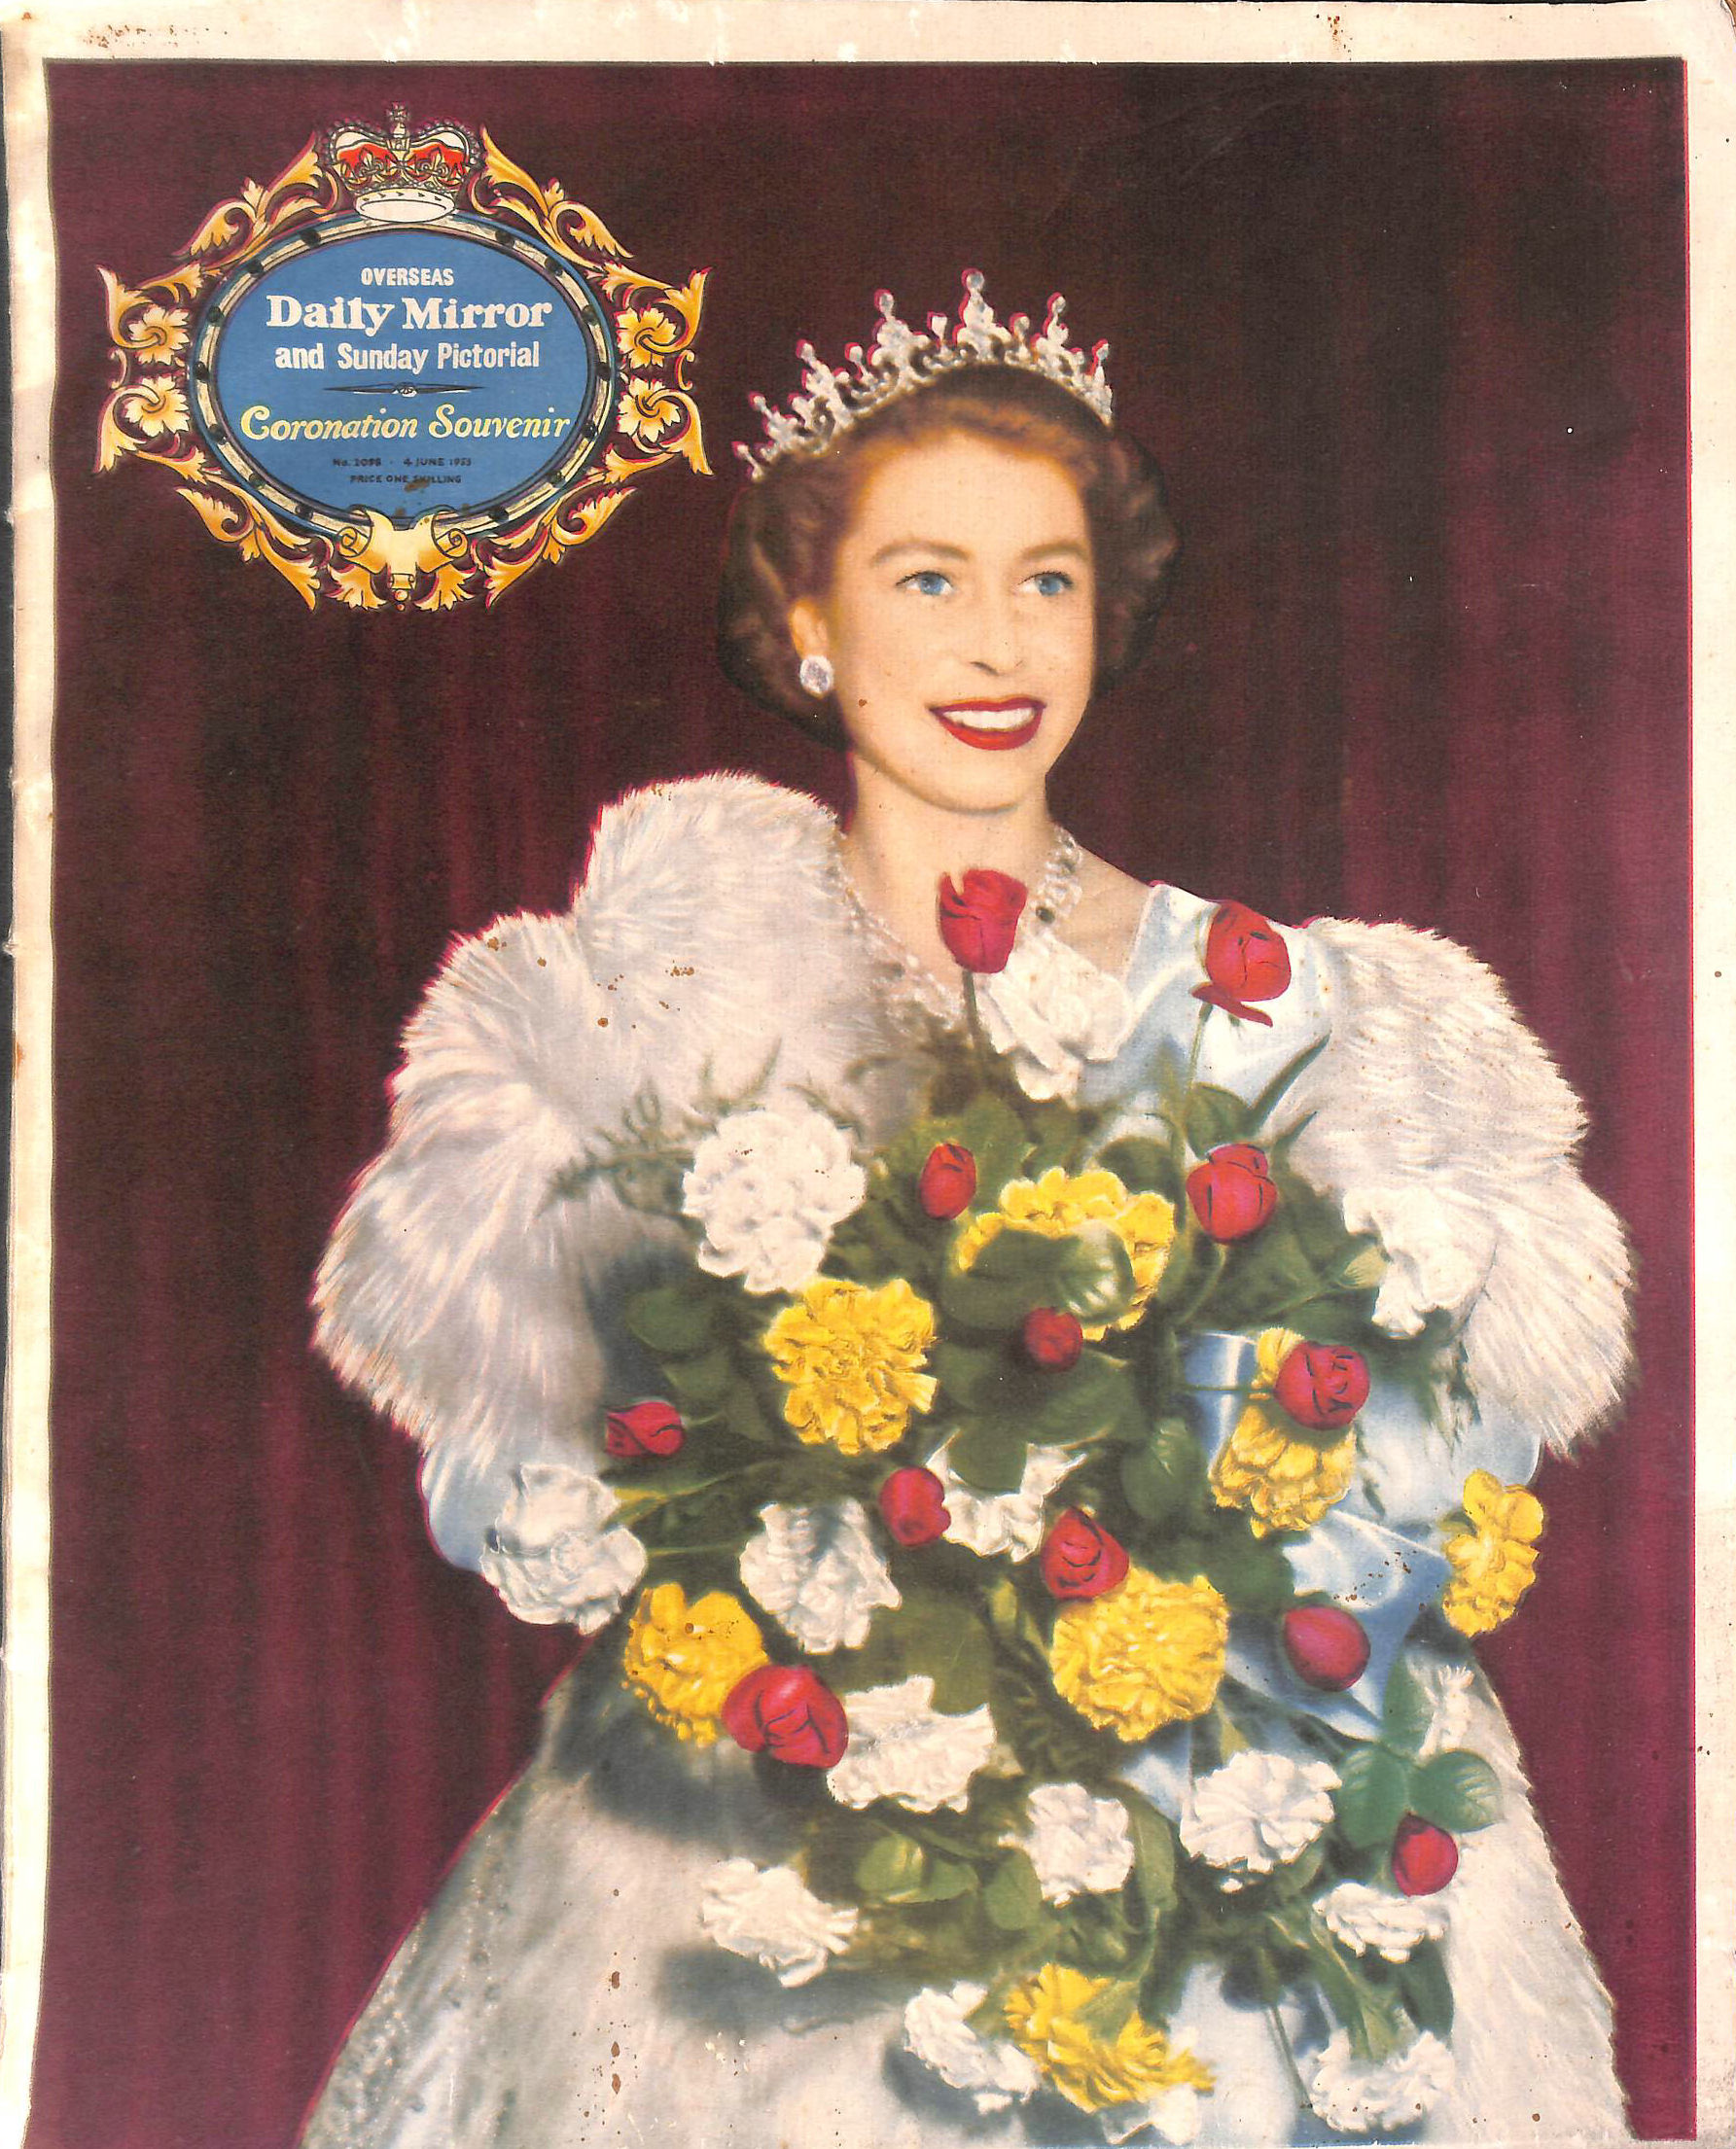 ANON. - Overseas Daily Mirror and Sunday Pictorial: coronation souvenir, 4 June 1953